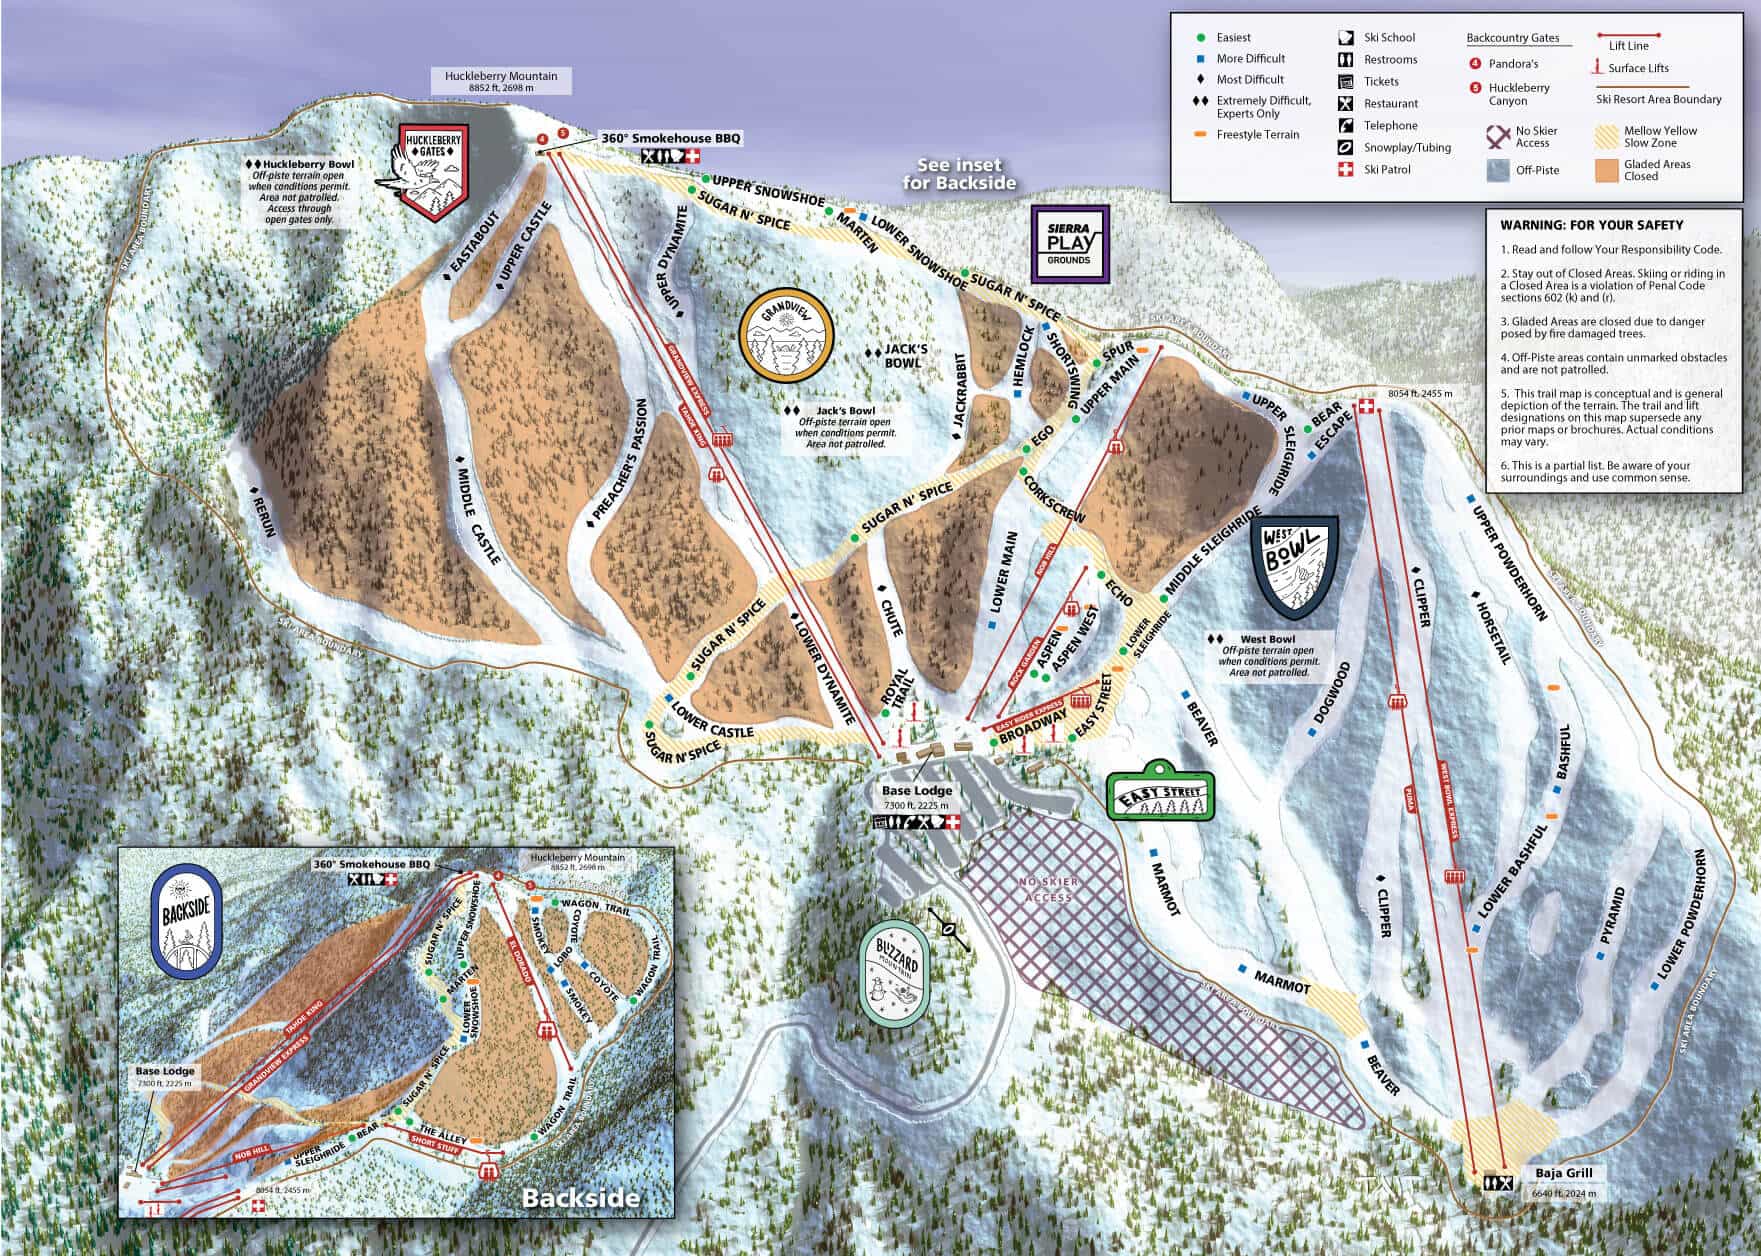 Sierra-at-tahoe, california, trail map